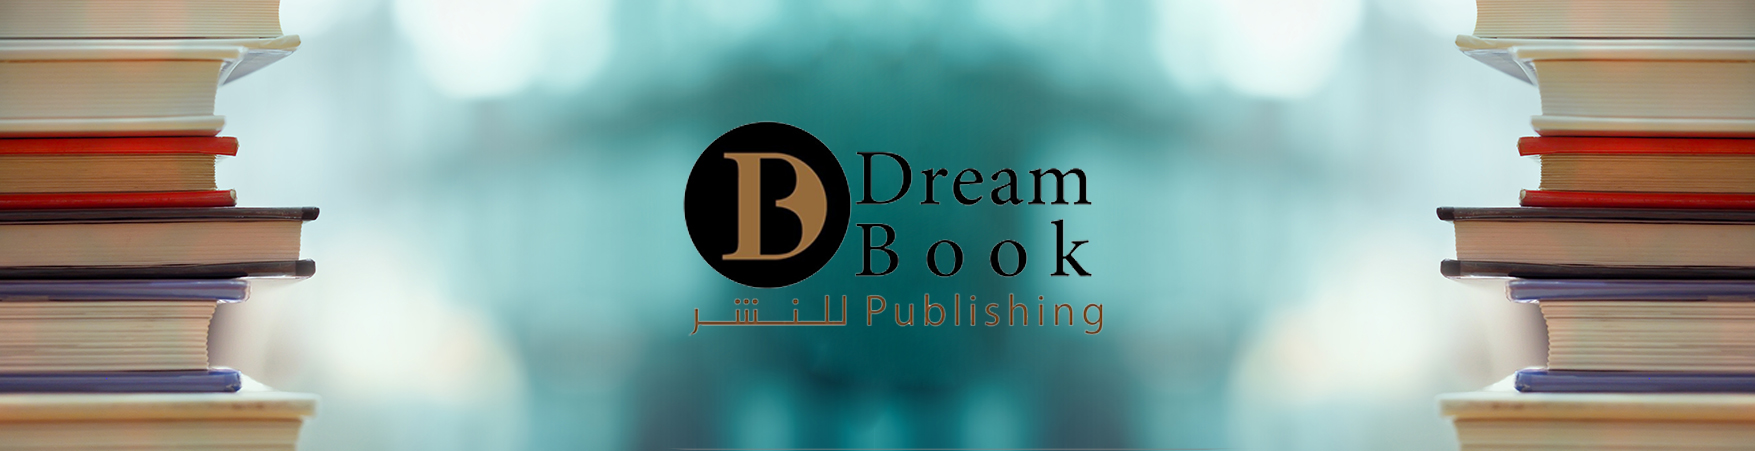 Dream Book Publishing